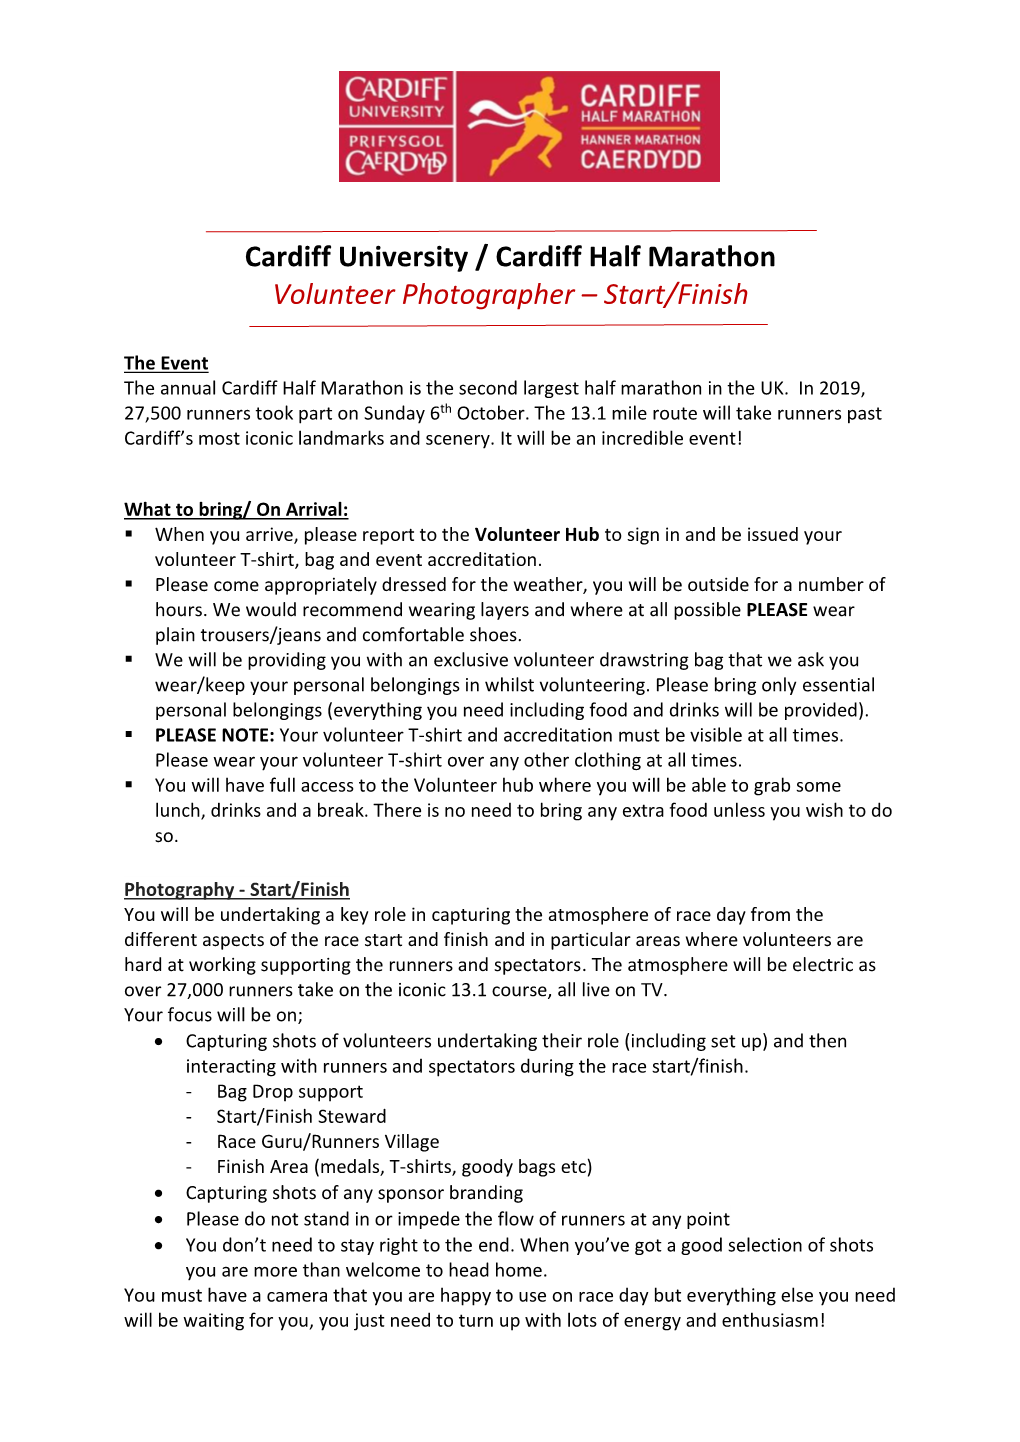 Cardiff University / Cardiff Half Marathon Volunteer Photographer – Start/Finish